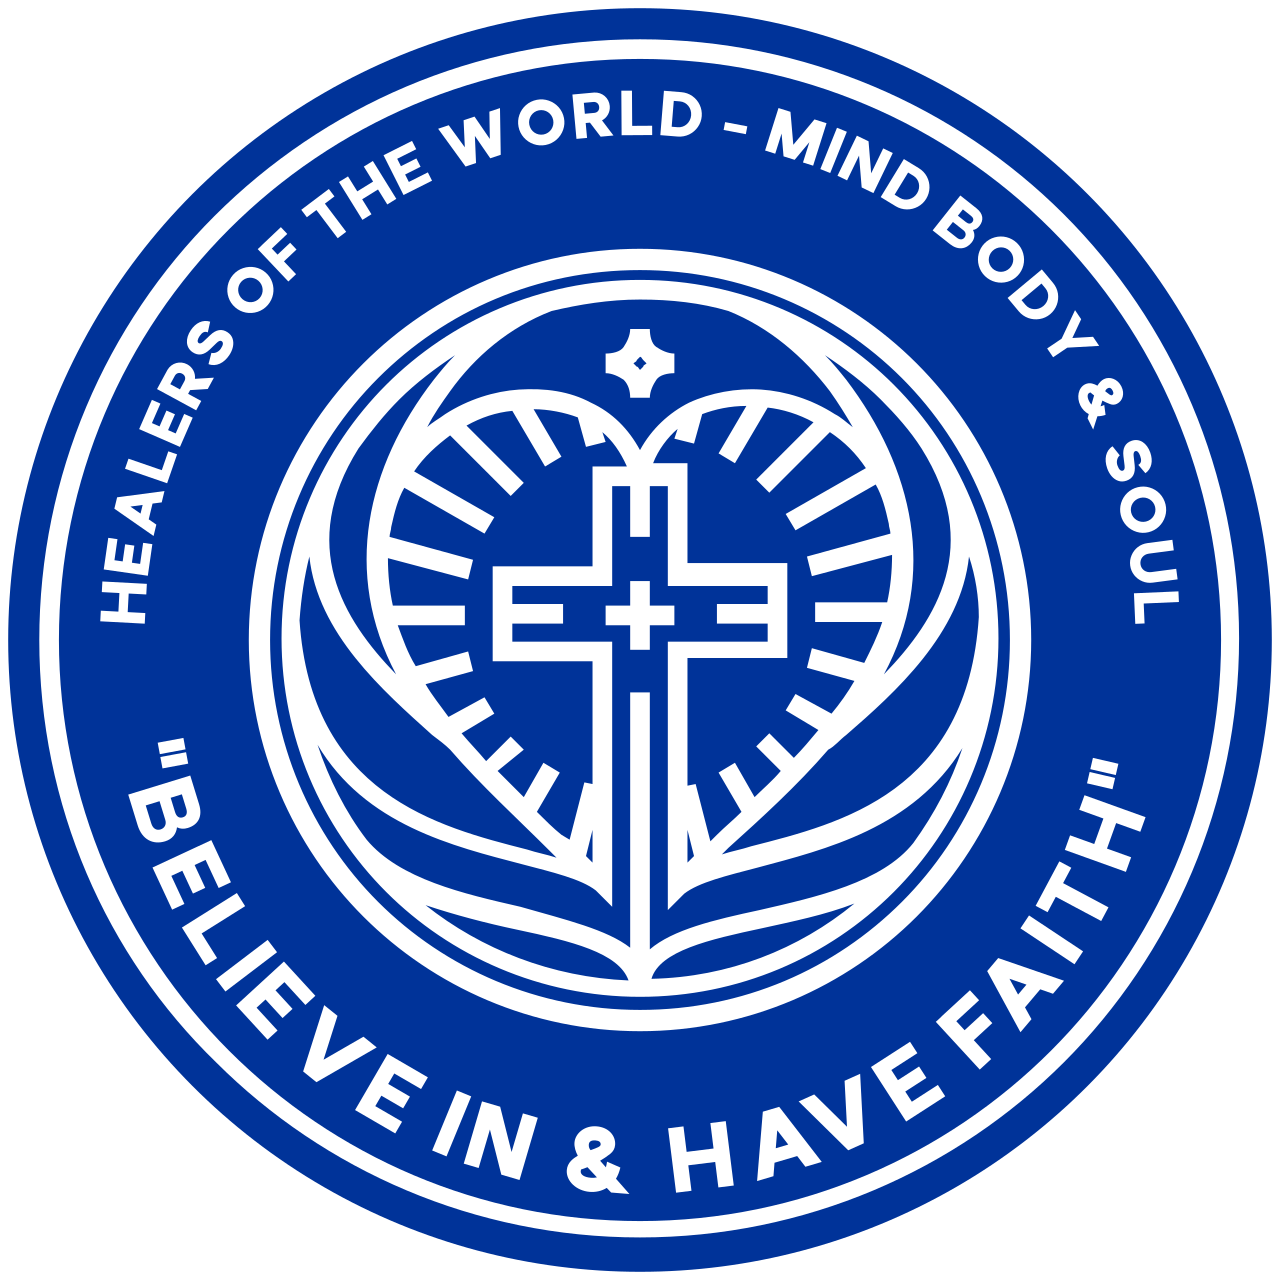 Healers of the World - Mind Body & Soul's logo